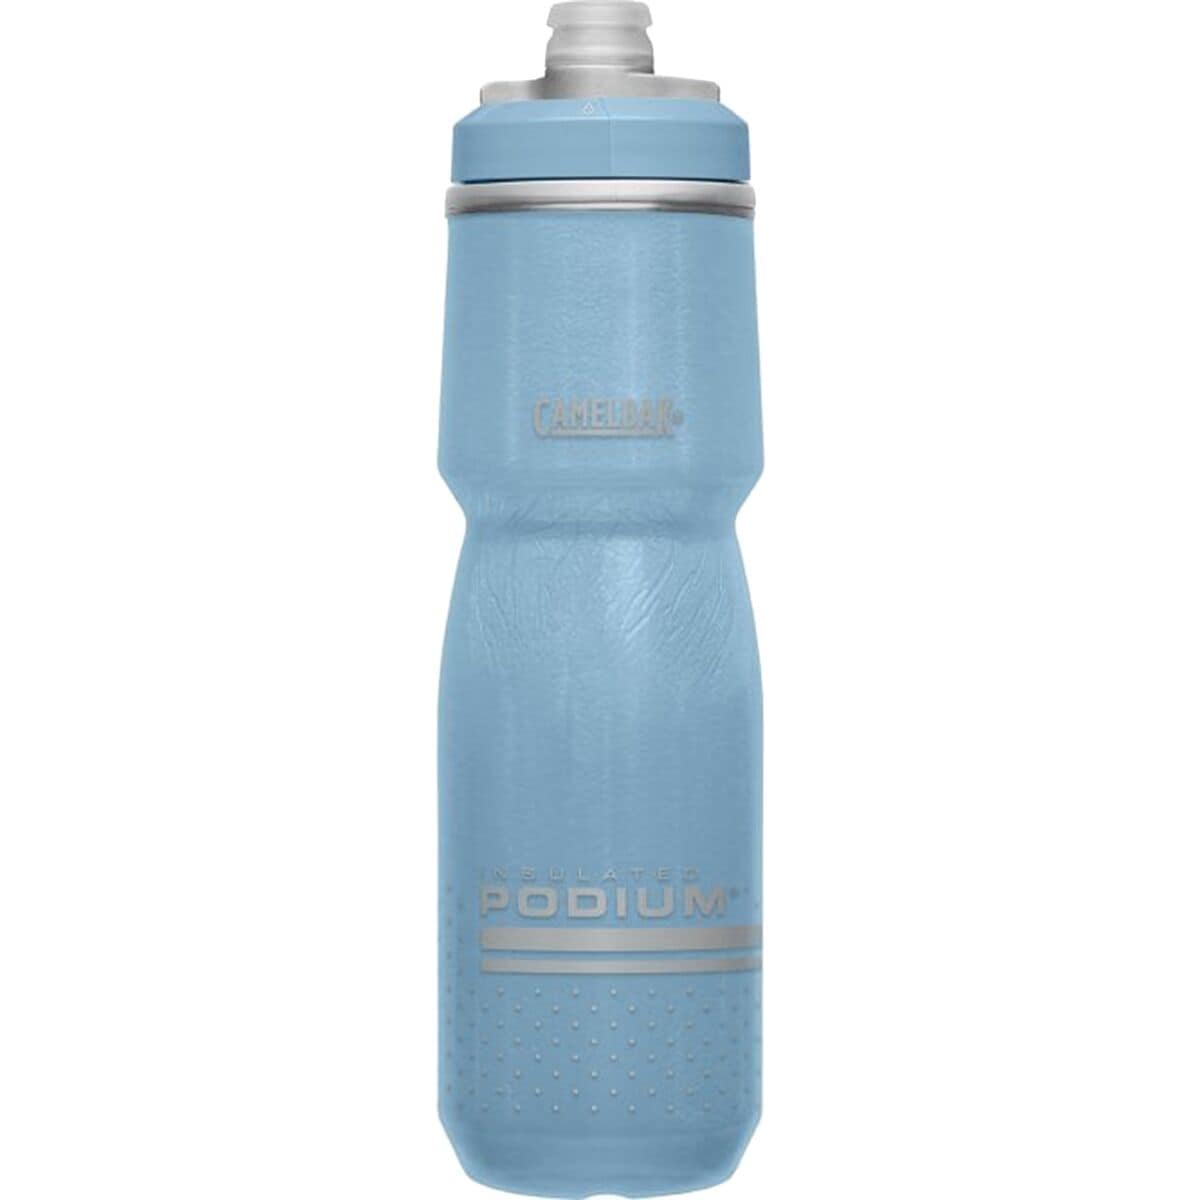 CamelBak Podium Chill 24oz Water Bottle Stone Blue, One Size